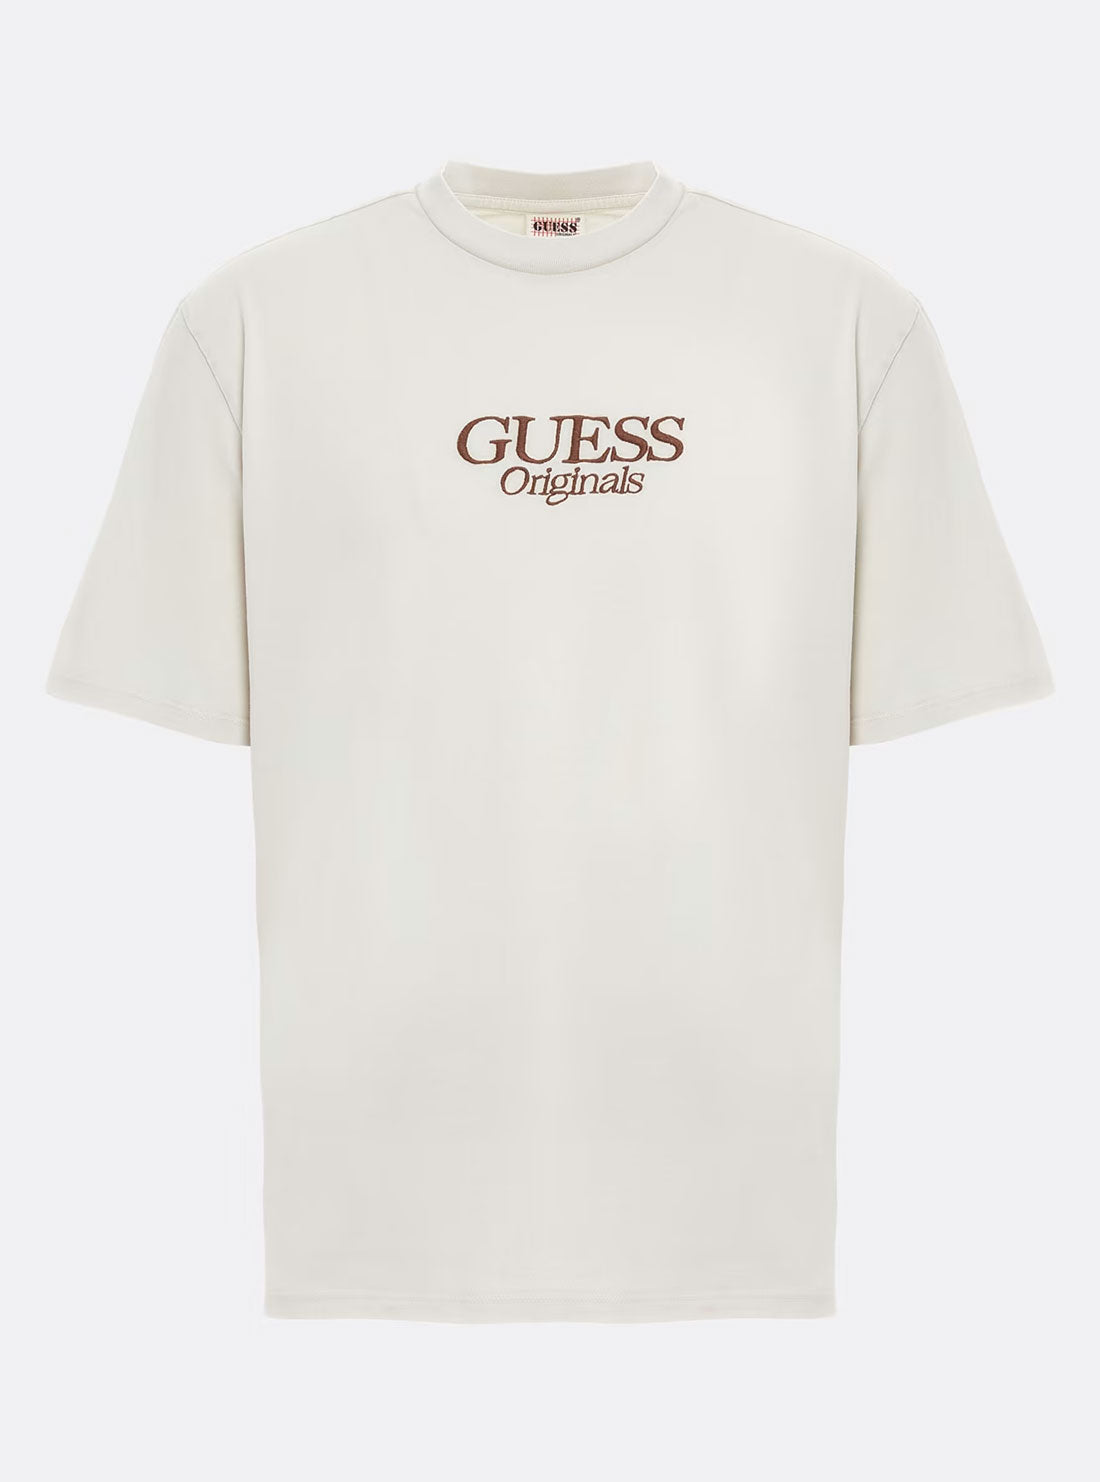 Guess Originals Sandy Brent Logo T-Shirt